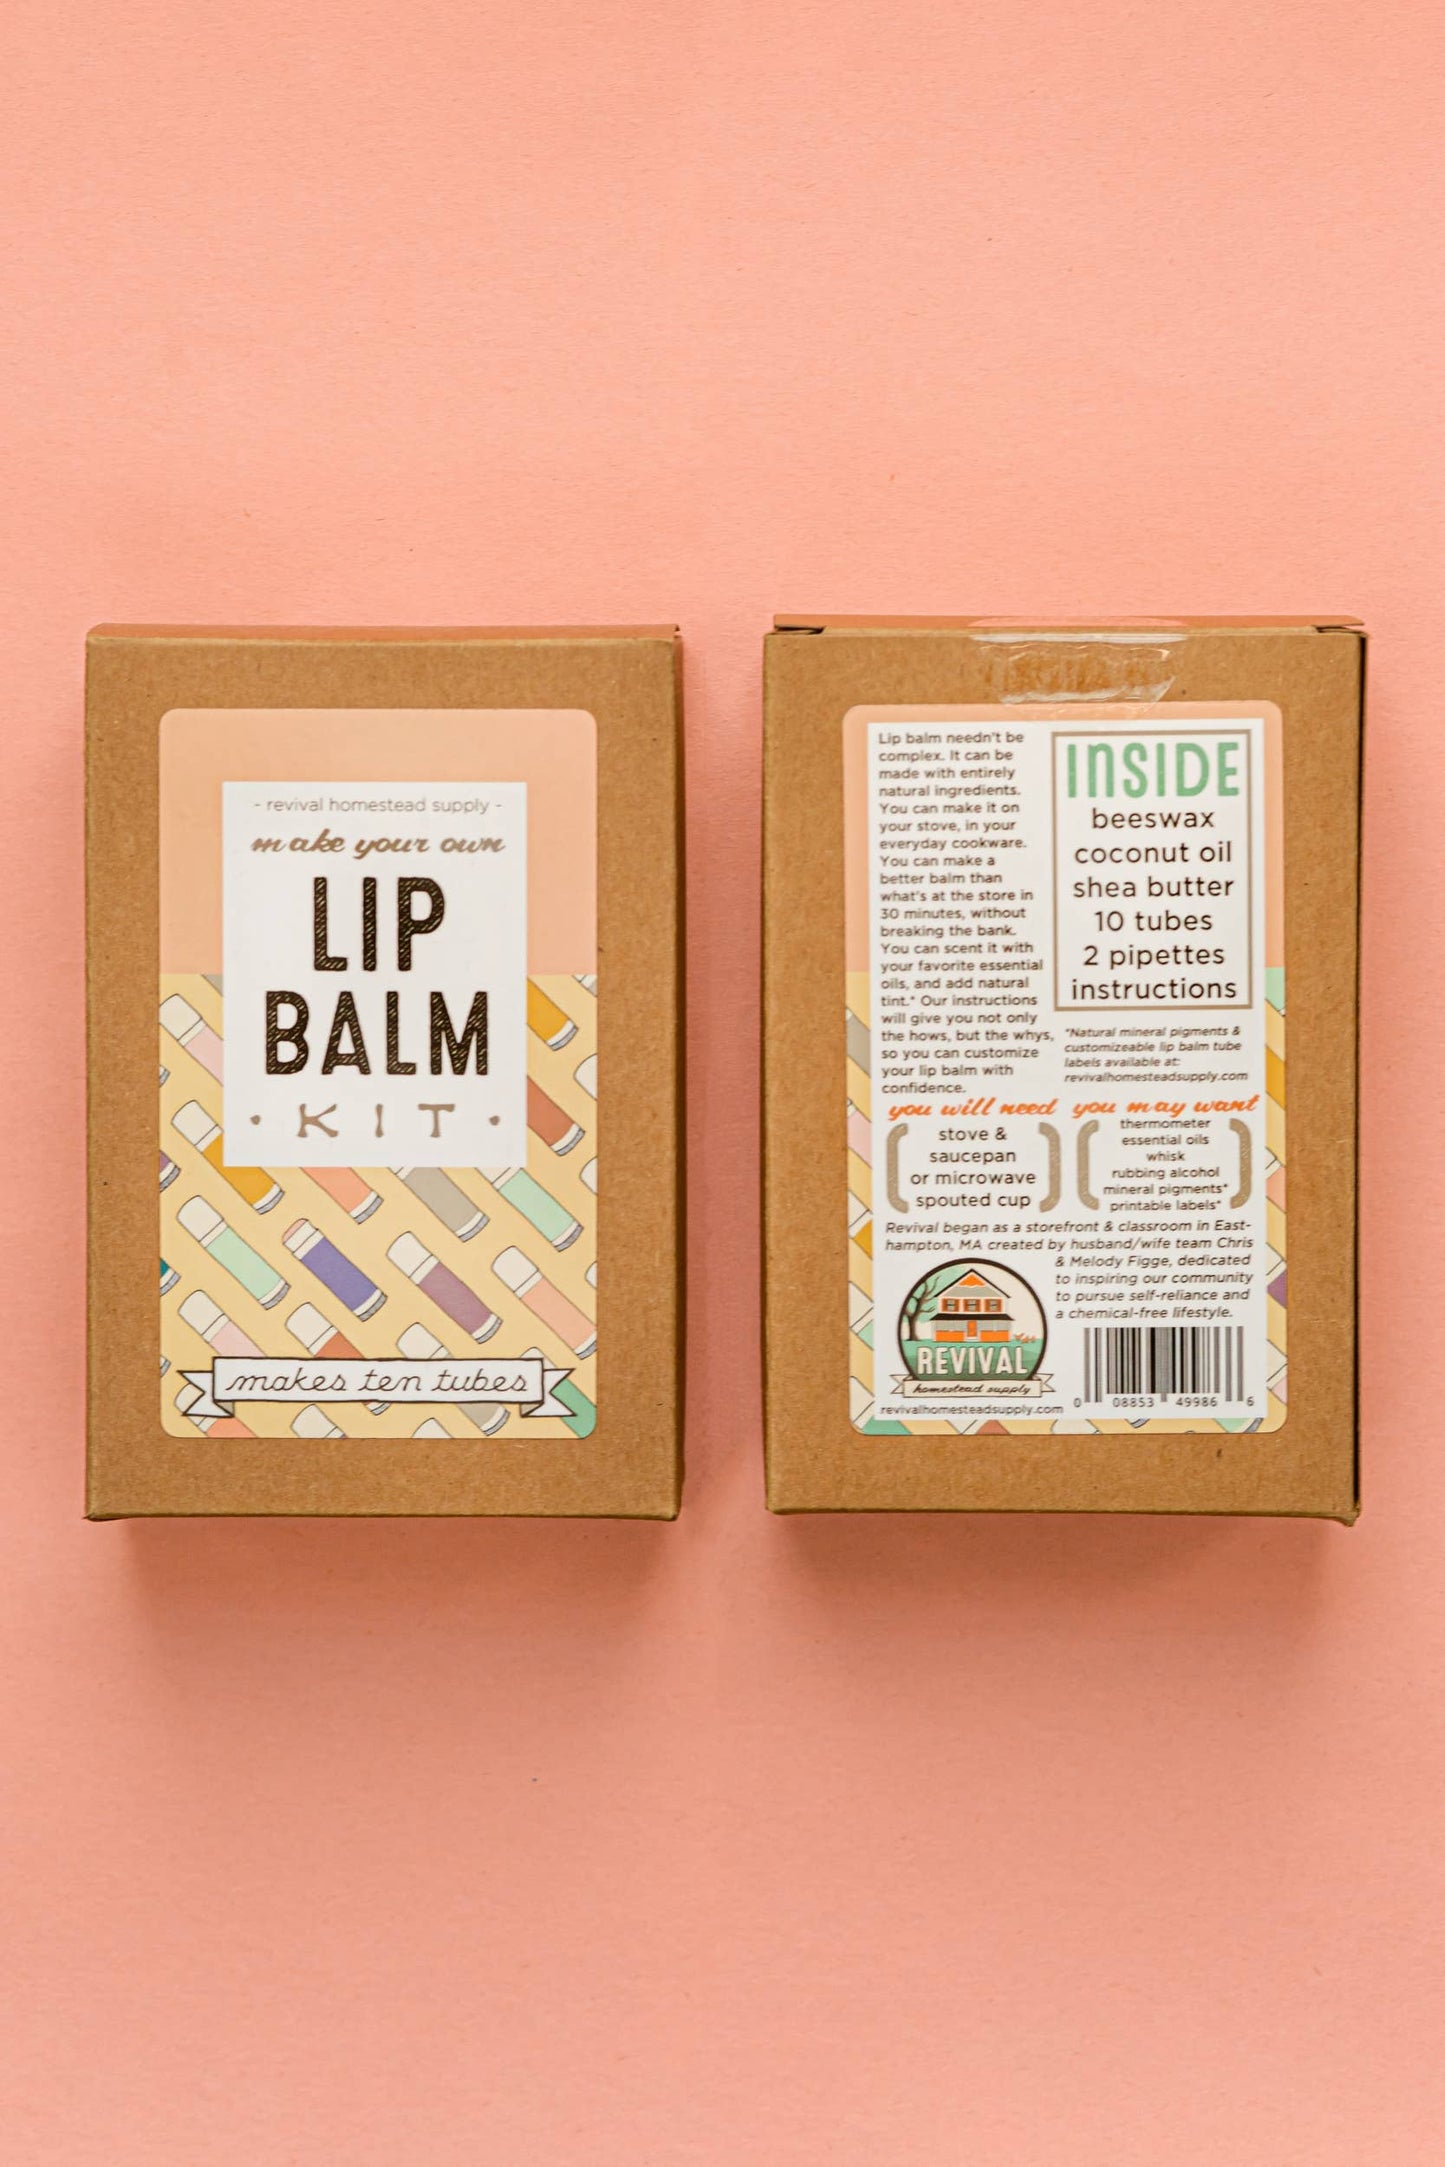 Lip Balm Kit, Make Your Own, DIY